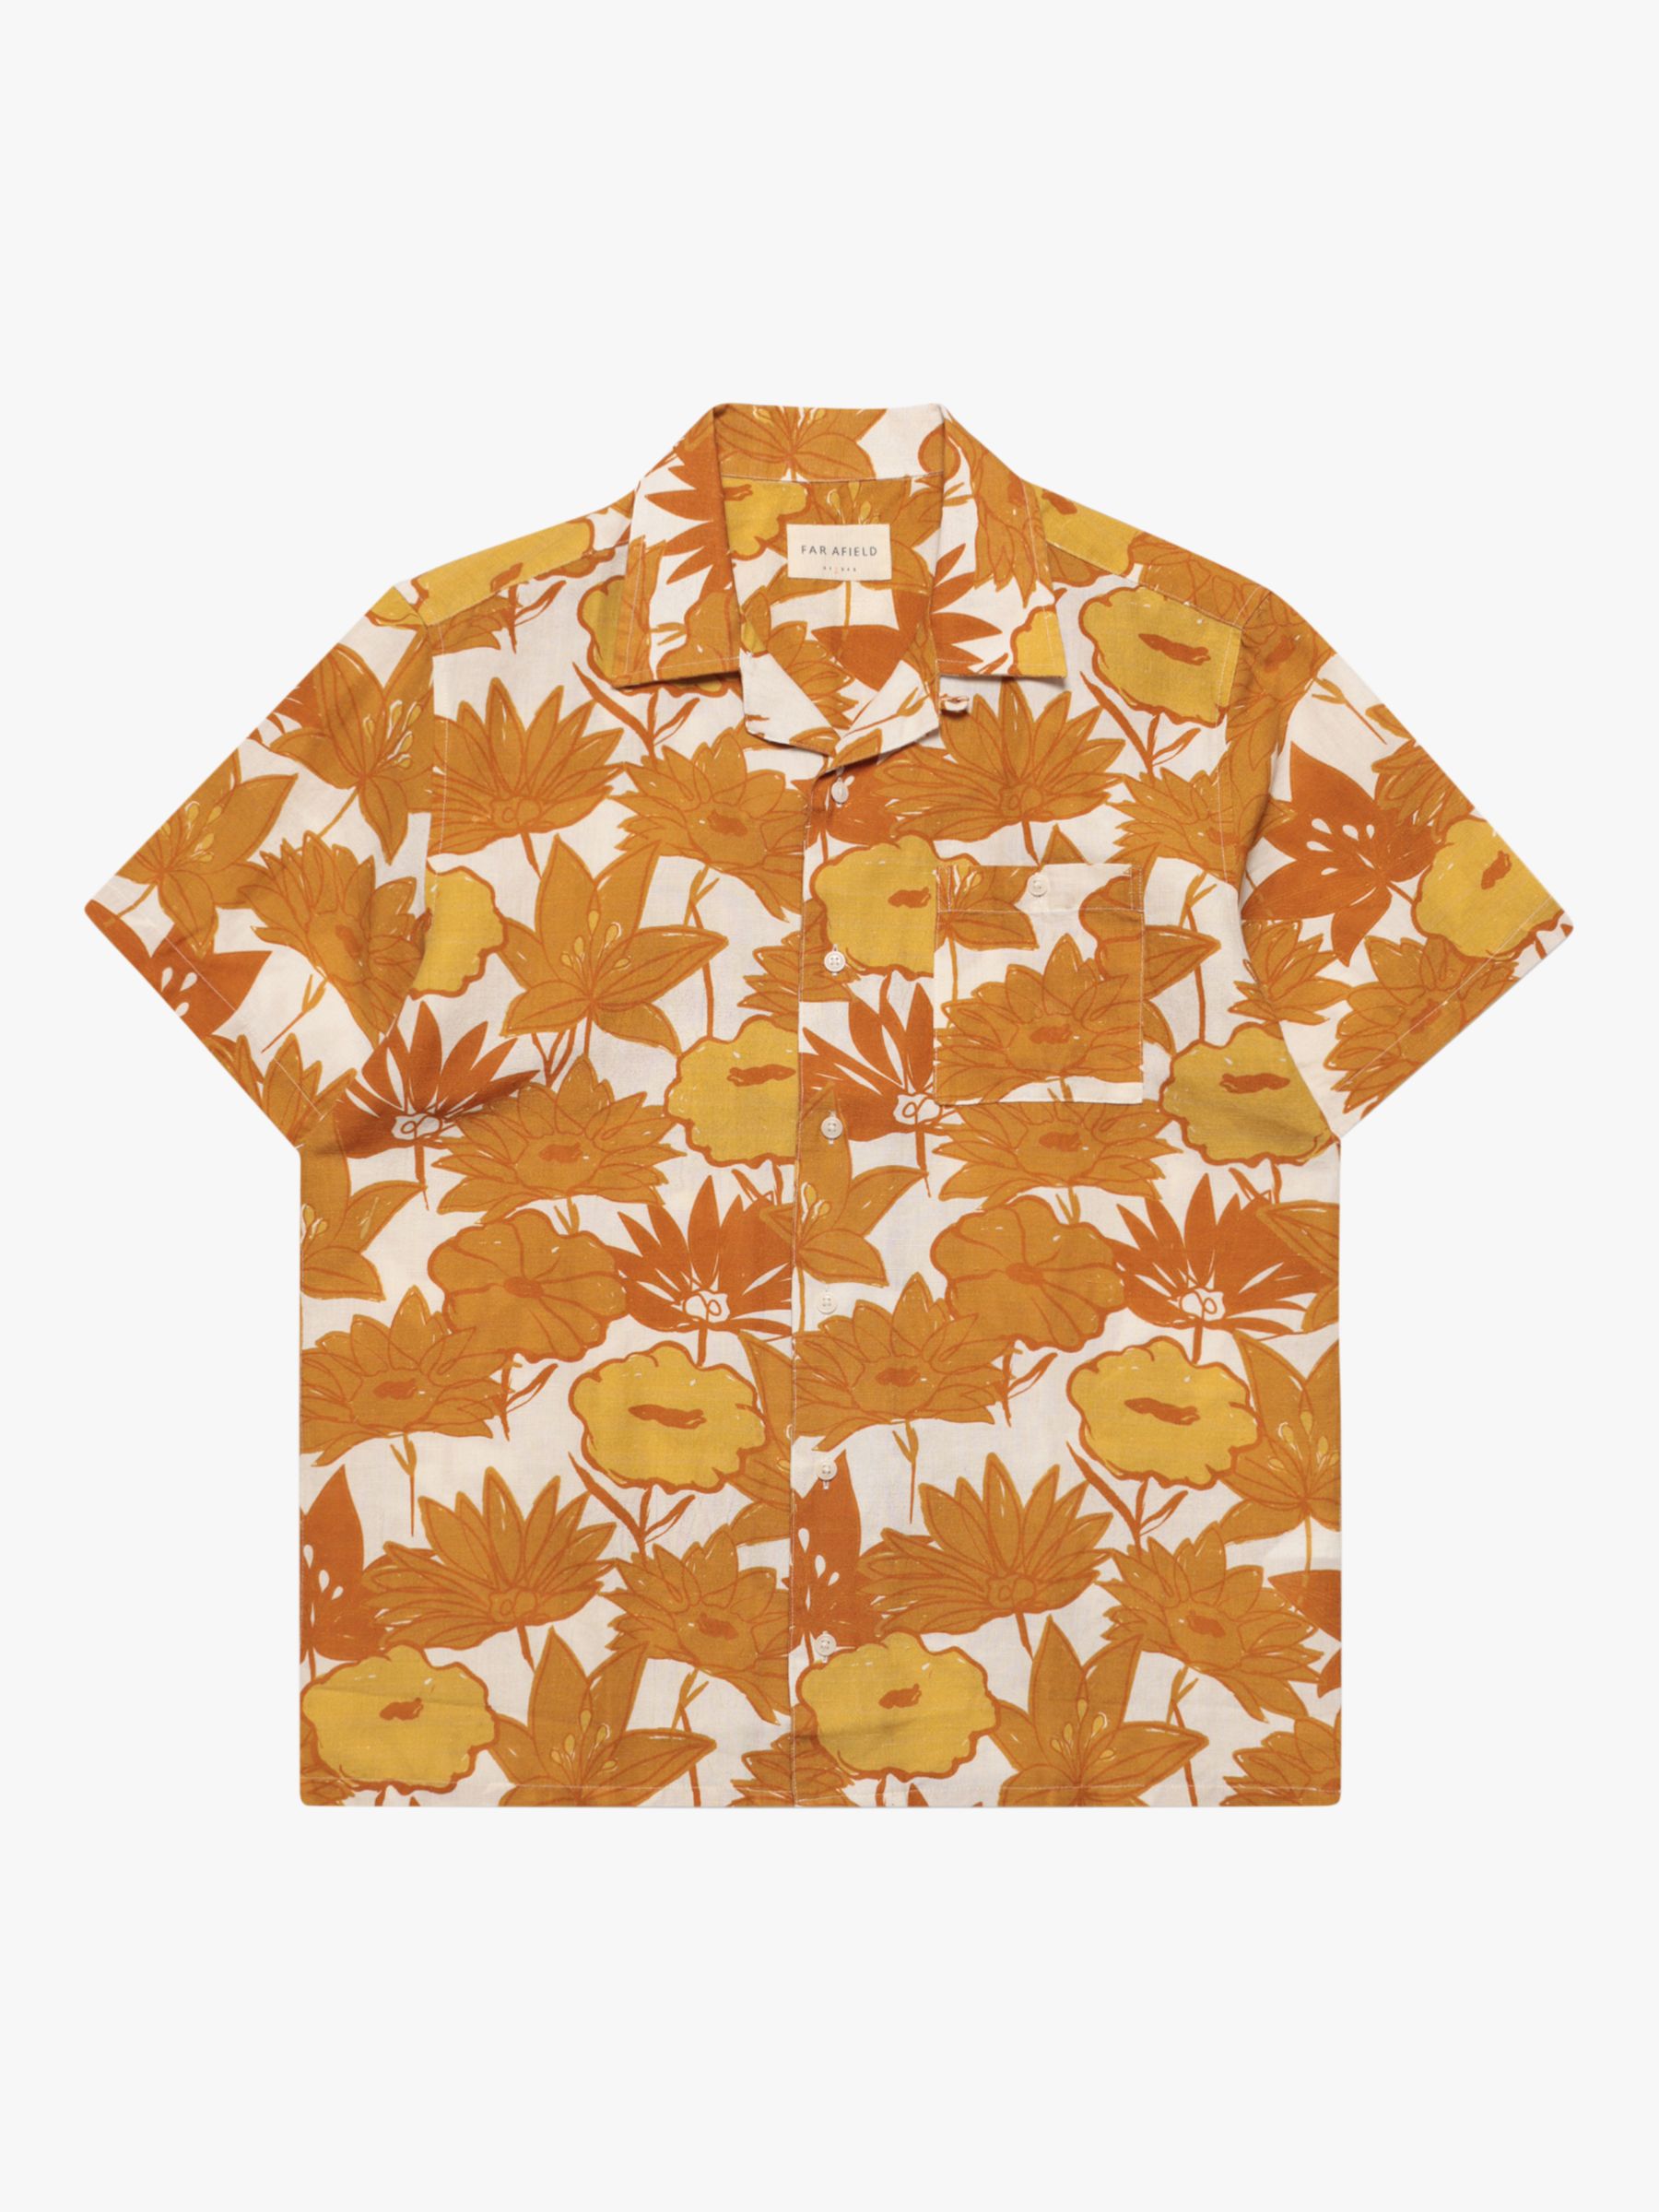 Far Afield Selleck Short Sleeve Shirt, Gold/Multi, M